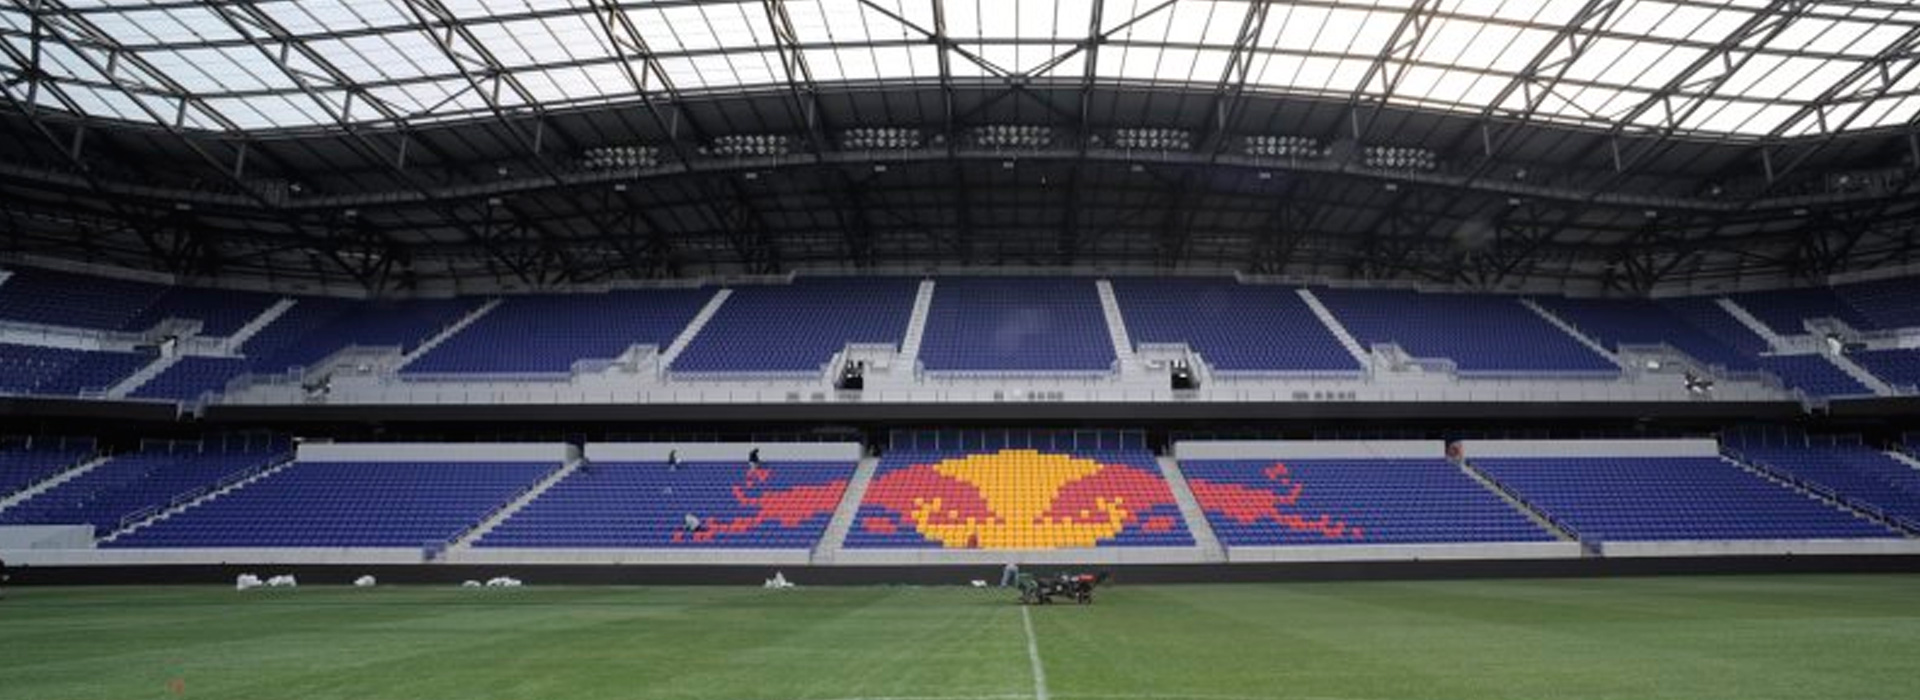 Tilstand metan apt Red Bull Arena – Birdair